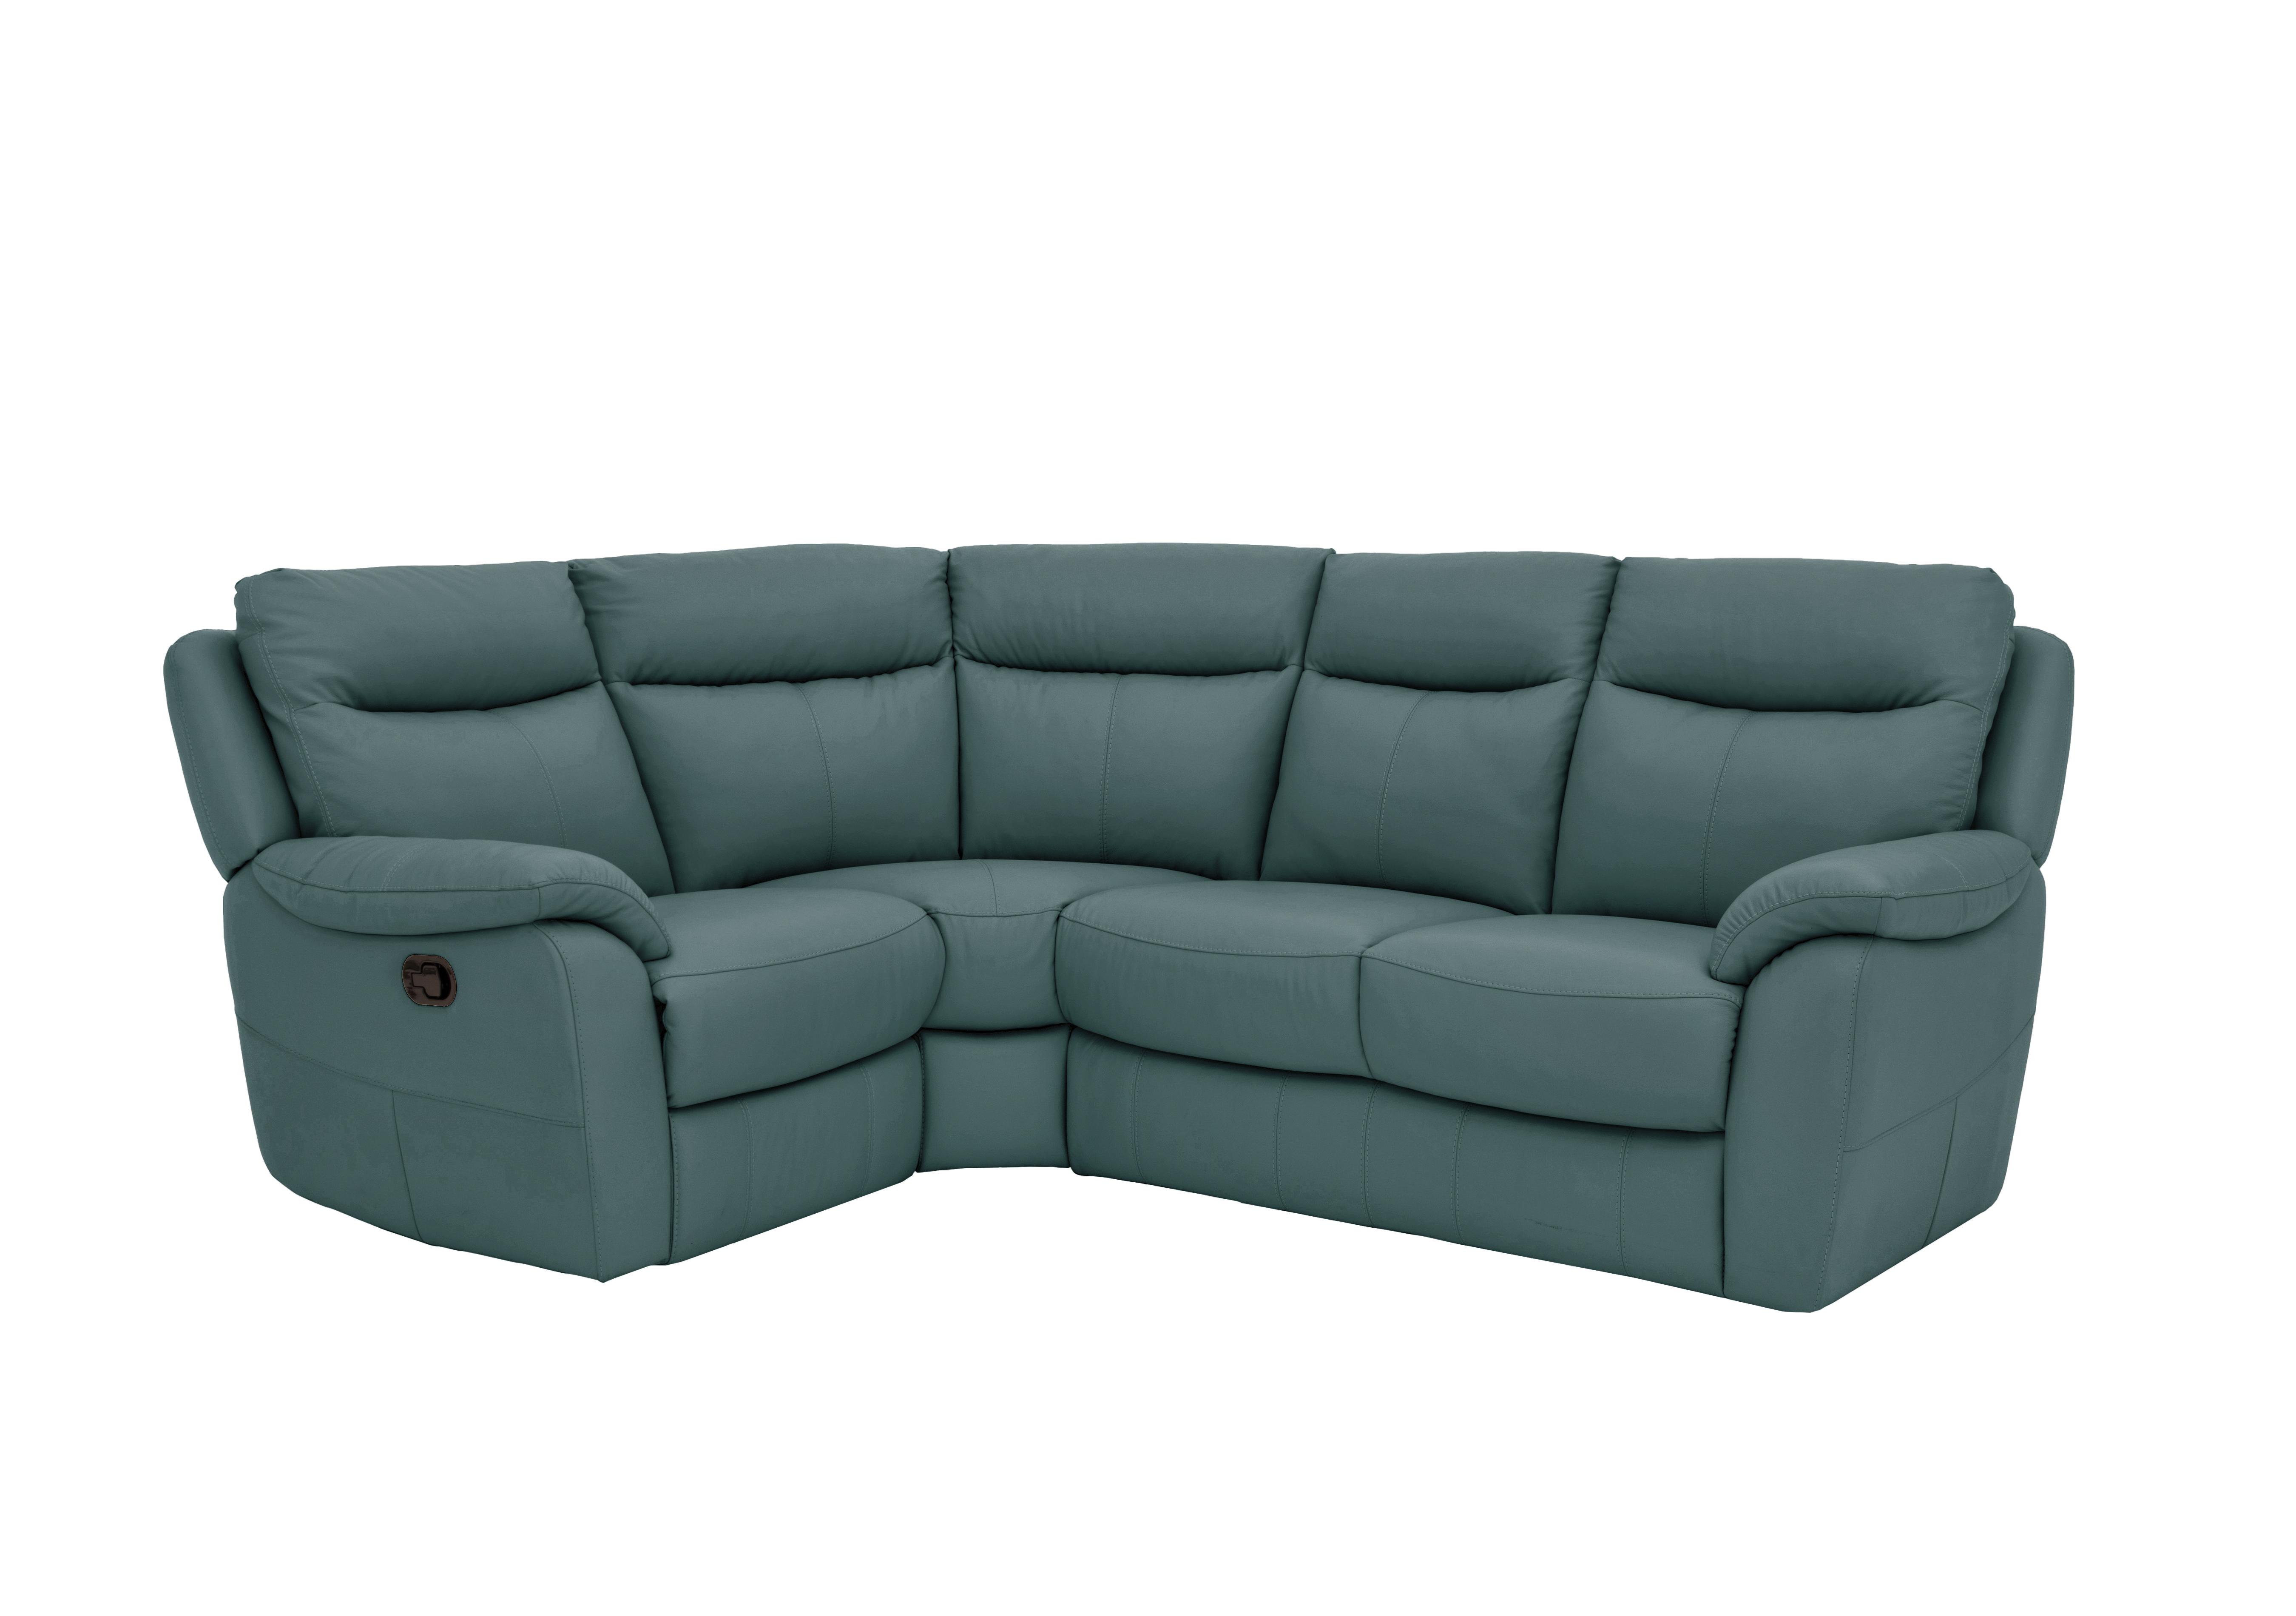 Snug Compact Leather Corner Sofa in Bv-301e Lake Green on Furniture Village